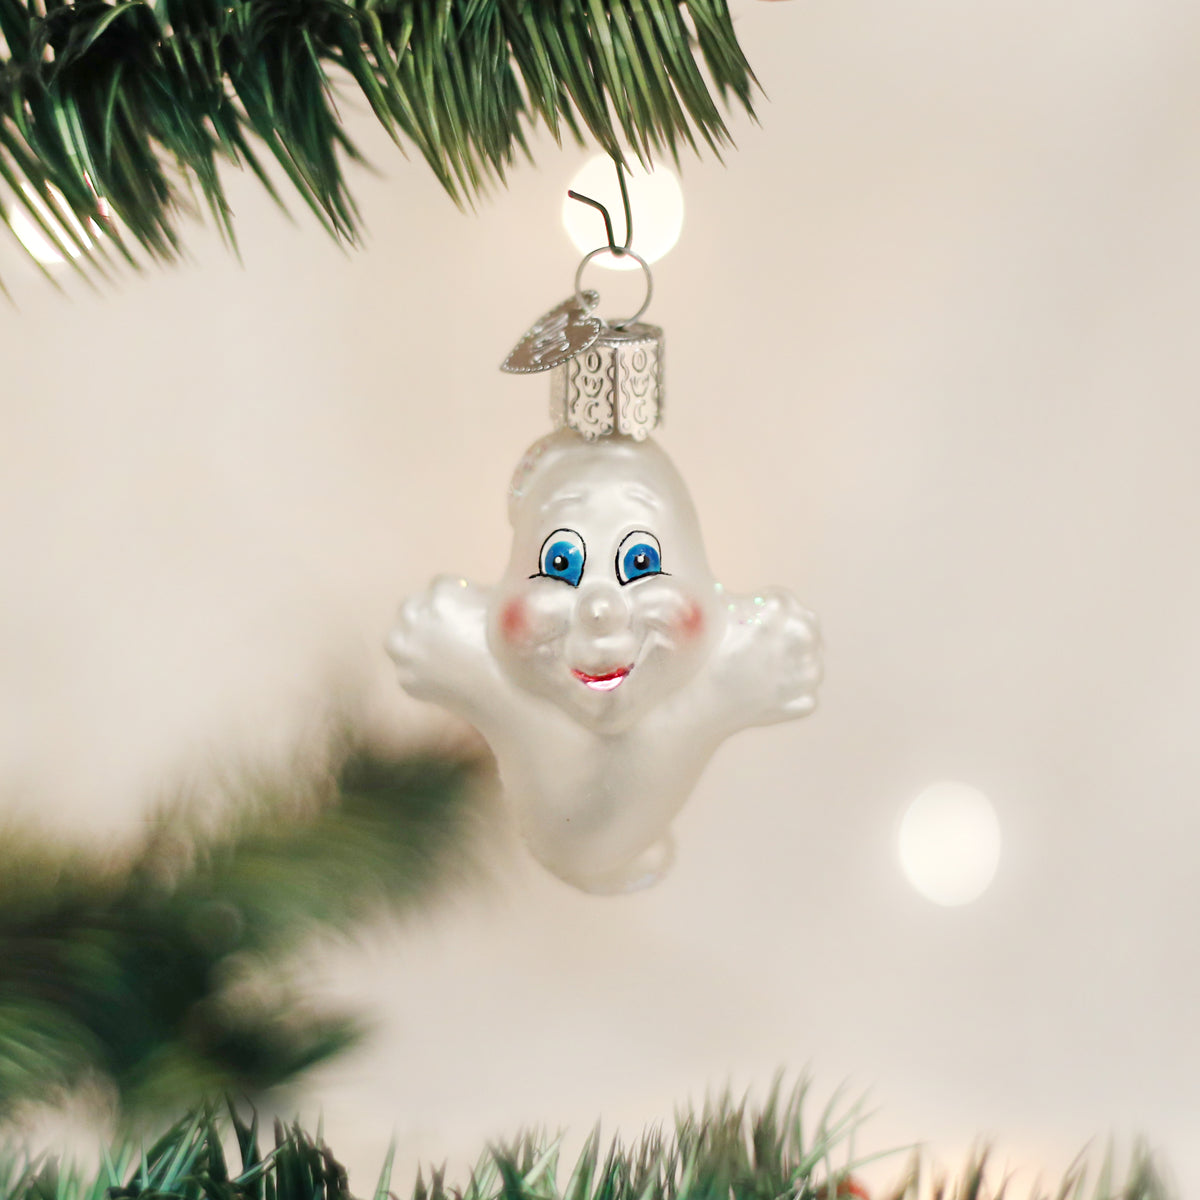 Miniature Ghost Ornament